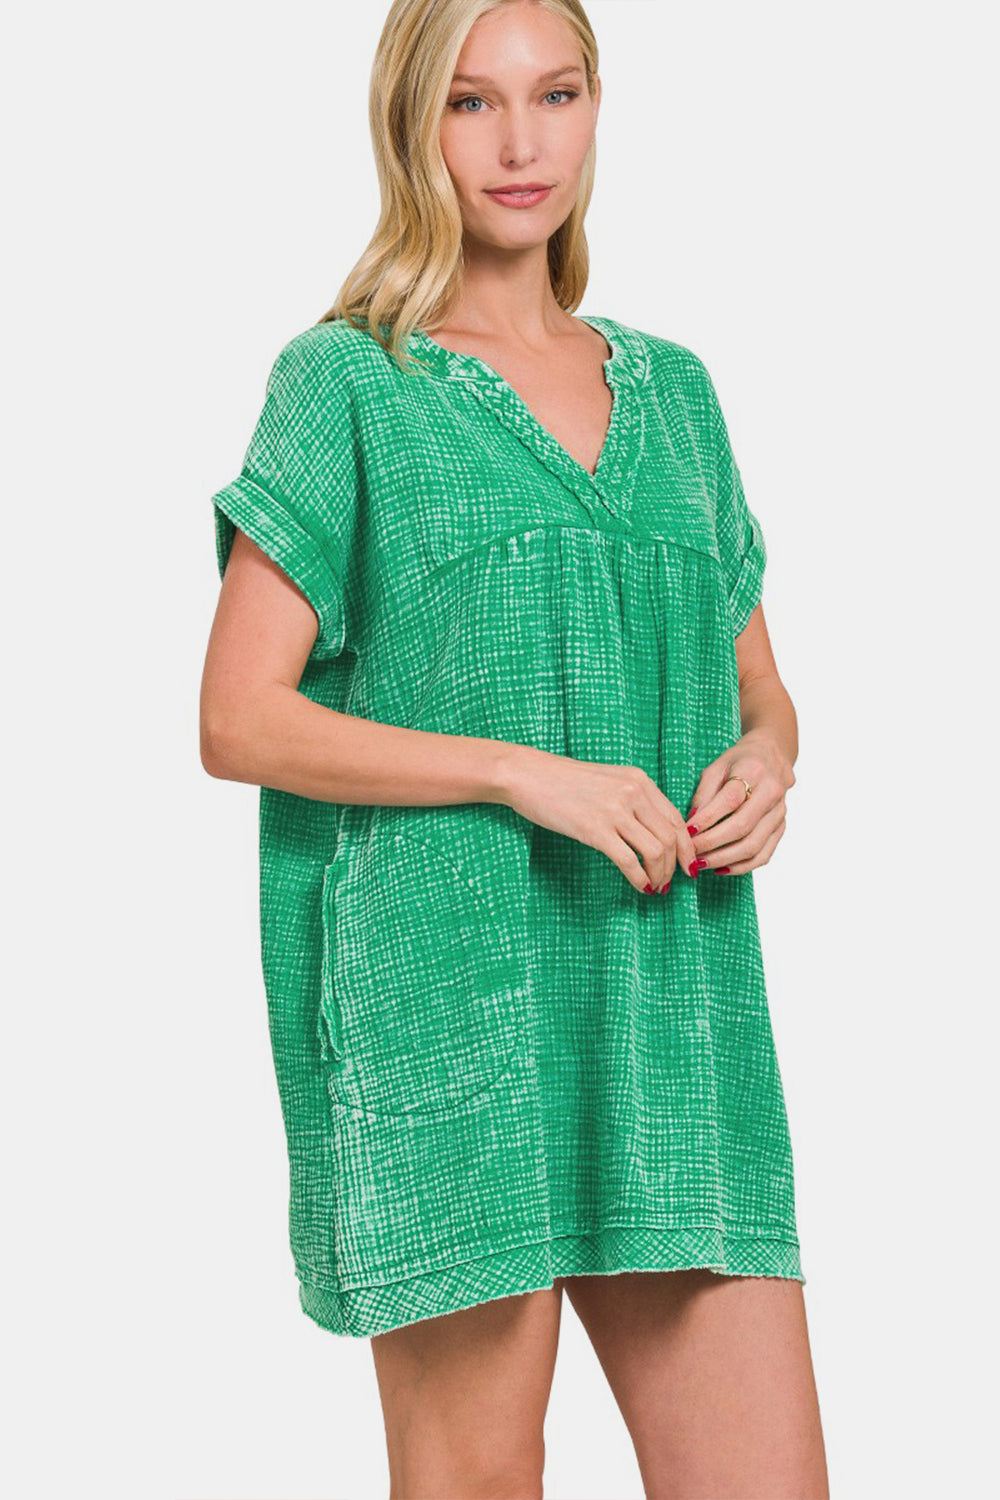 Zenana - Short Sleeve Mini Dress - Gauze Fabric - Kelly Green - Inspired Eye Boutique